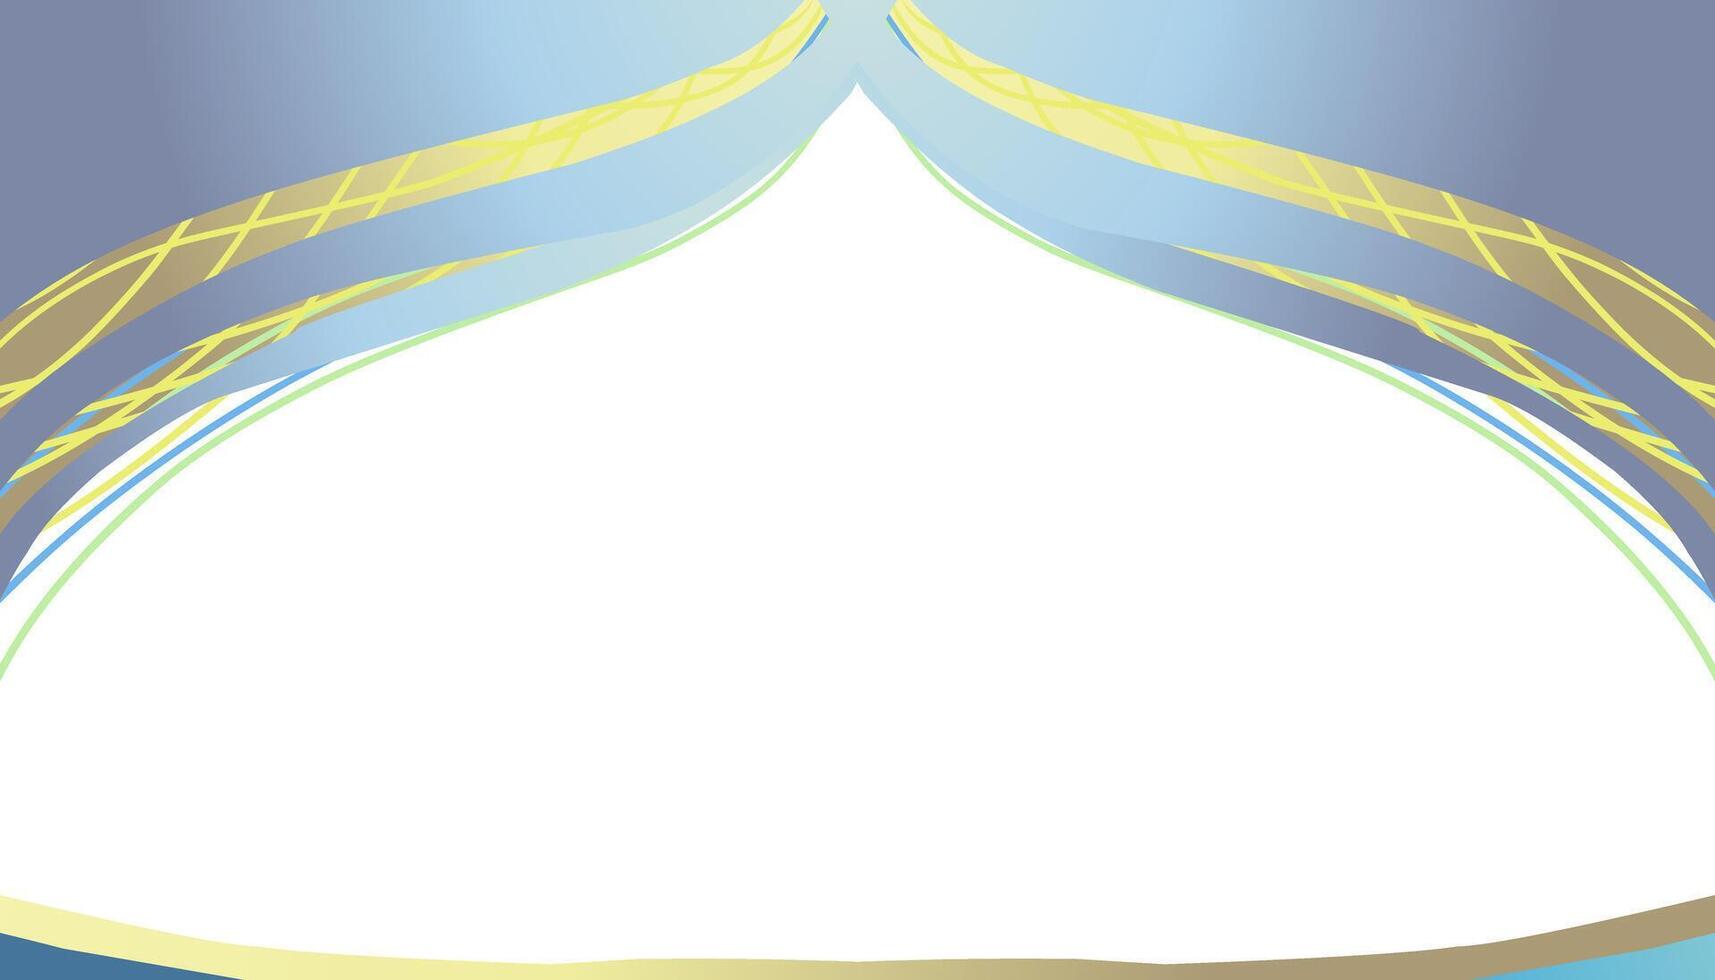 Ramadan e musulmano vacanze a tema sfondo con un' moschea cupola nel pendenza blu e oro Linee vettore